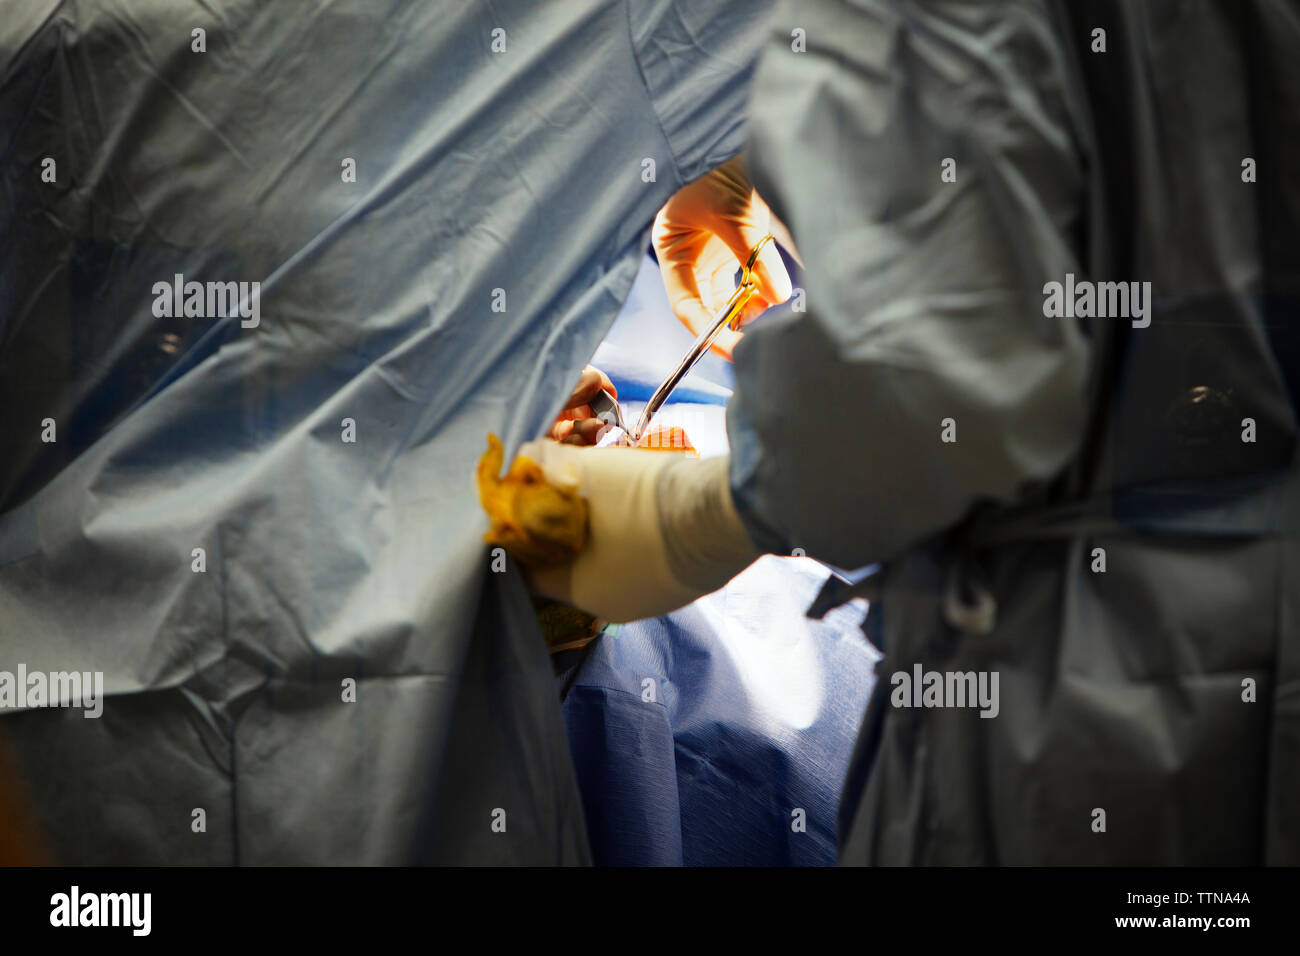 Surgeons During Operation Stock Photo Alamy